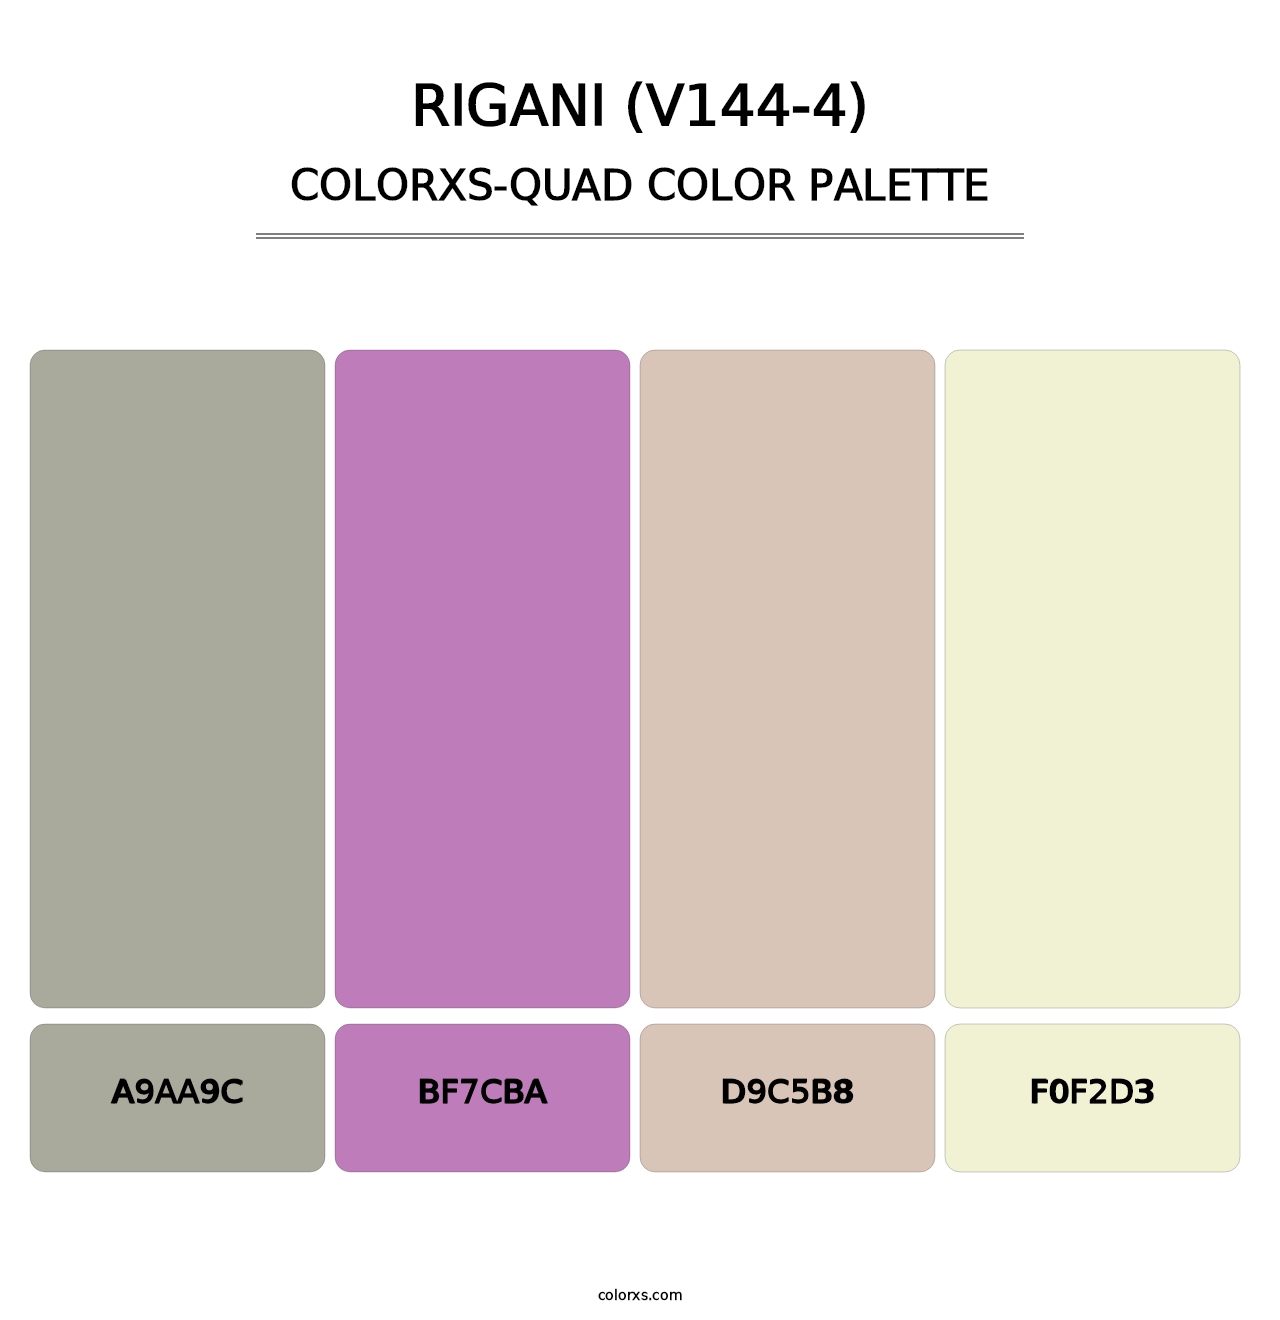 Rigani (V144-4) - Colorxs Quad Palette